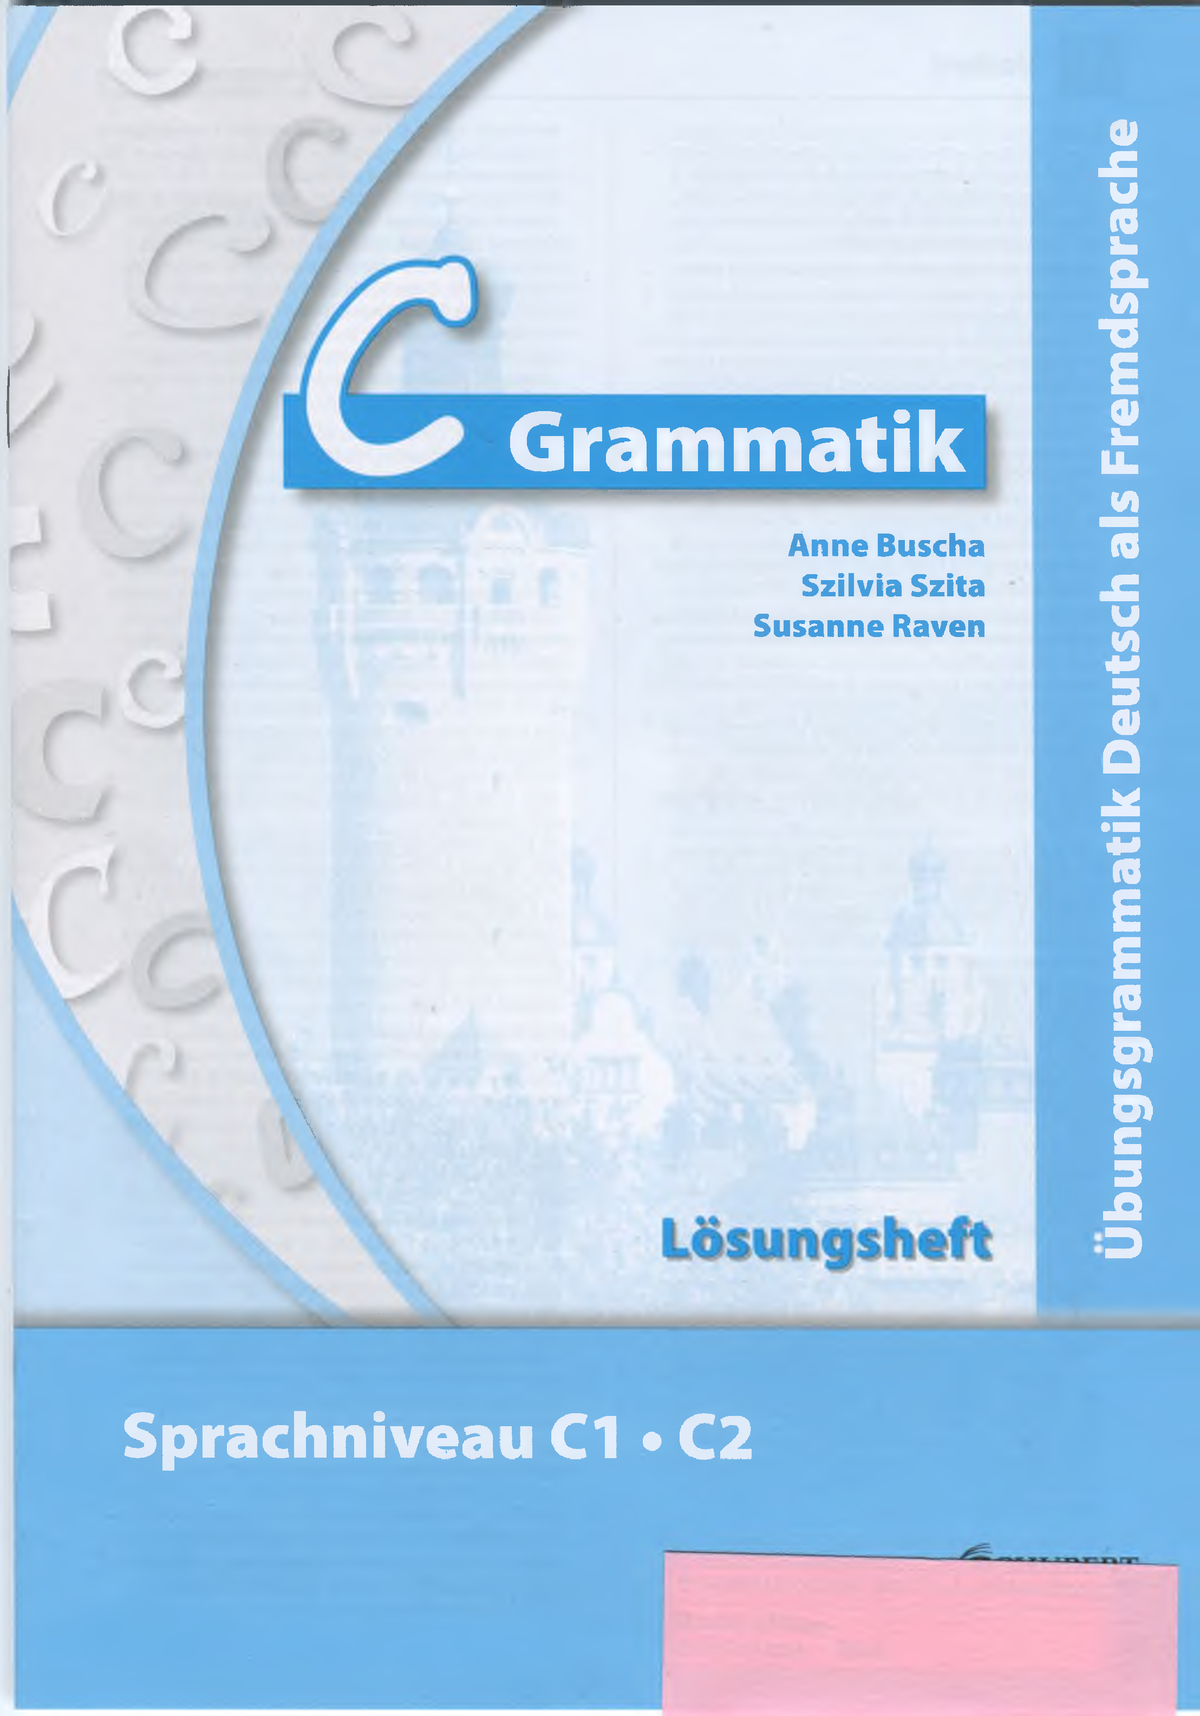 Grammatik C1 explanation for test prepration - Grammatik \ Anne Buscha